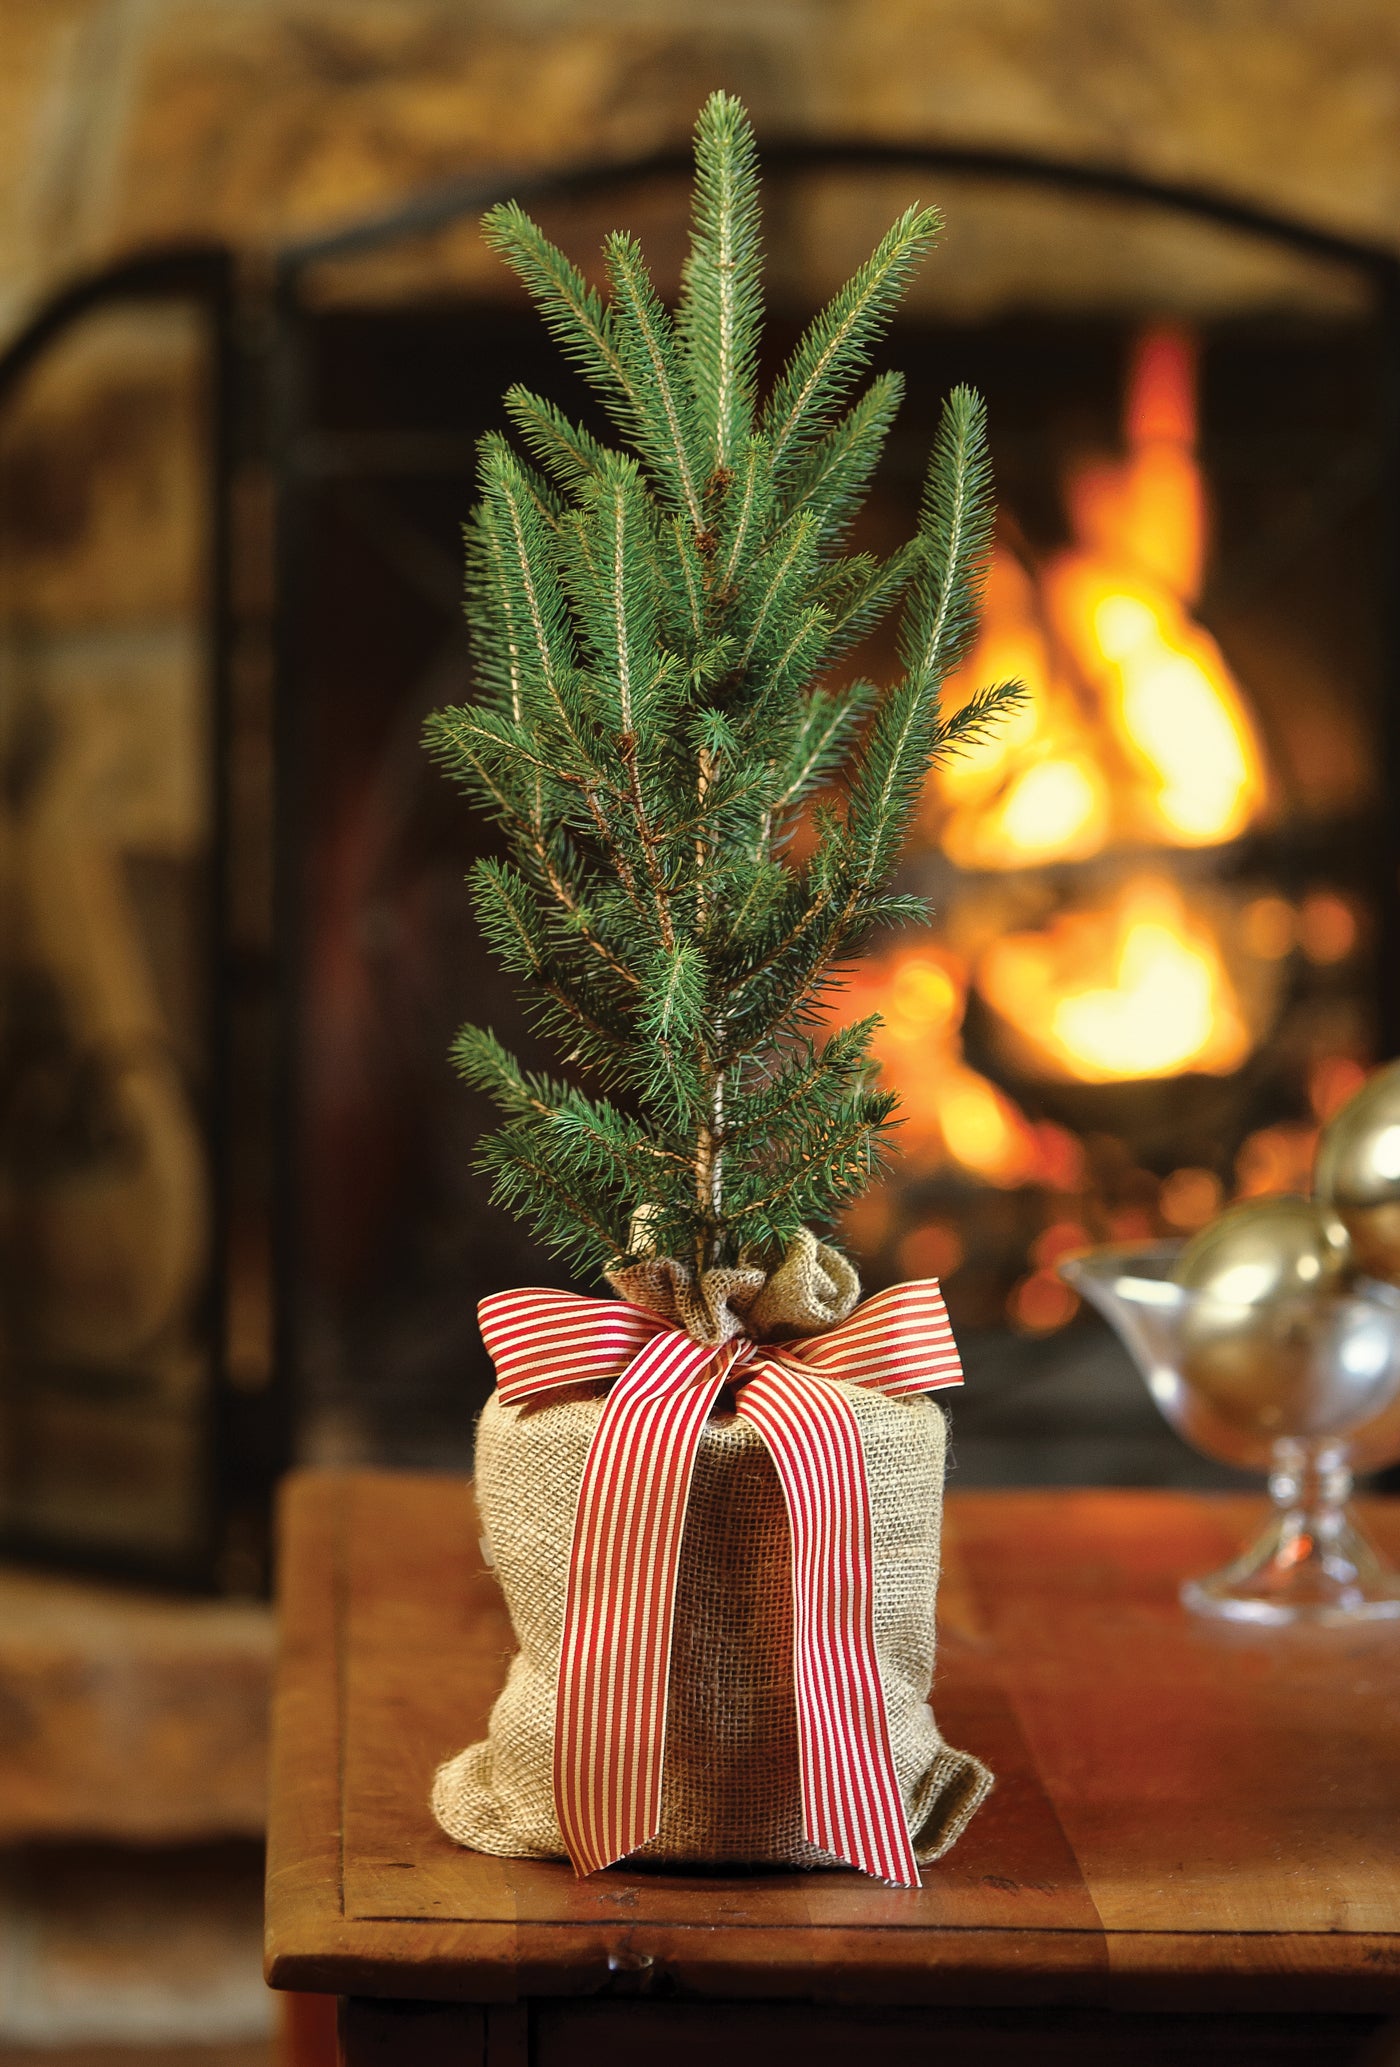 Blue Spruce Gift Tree